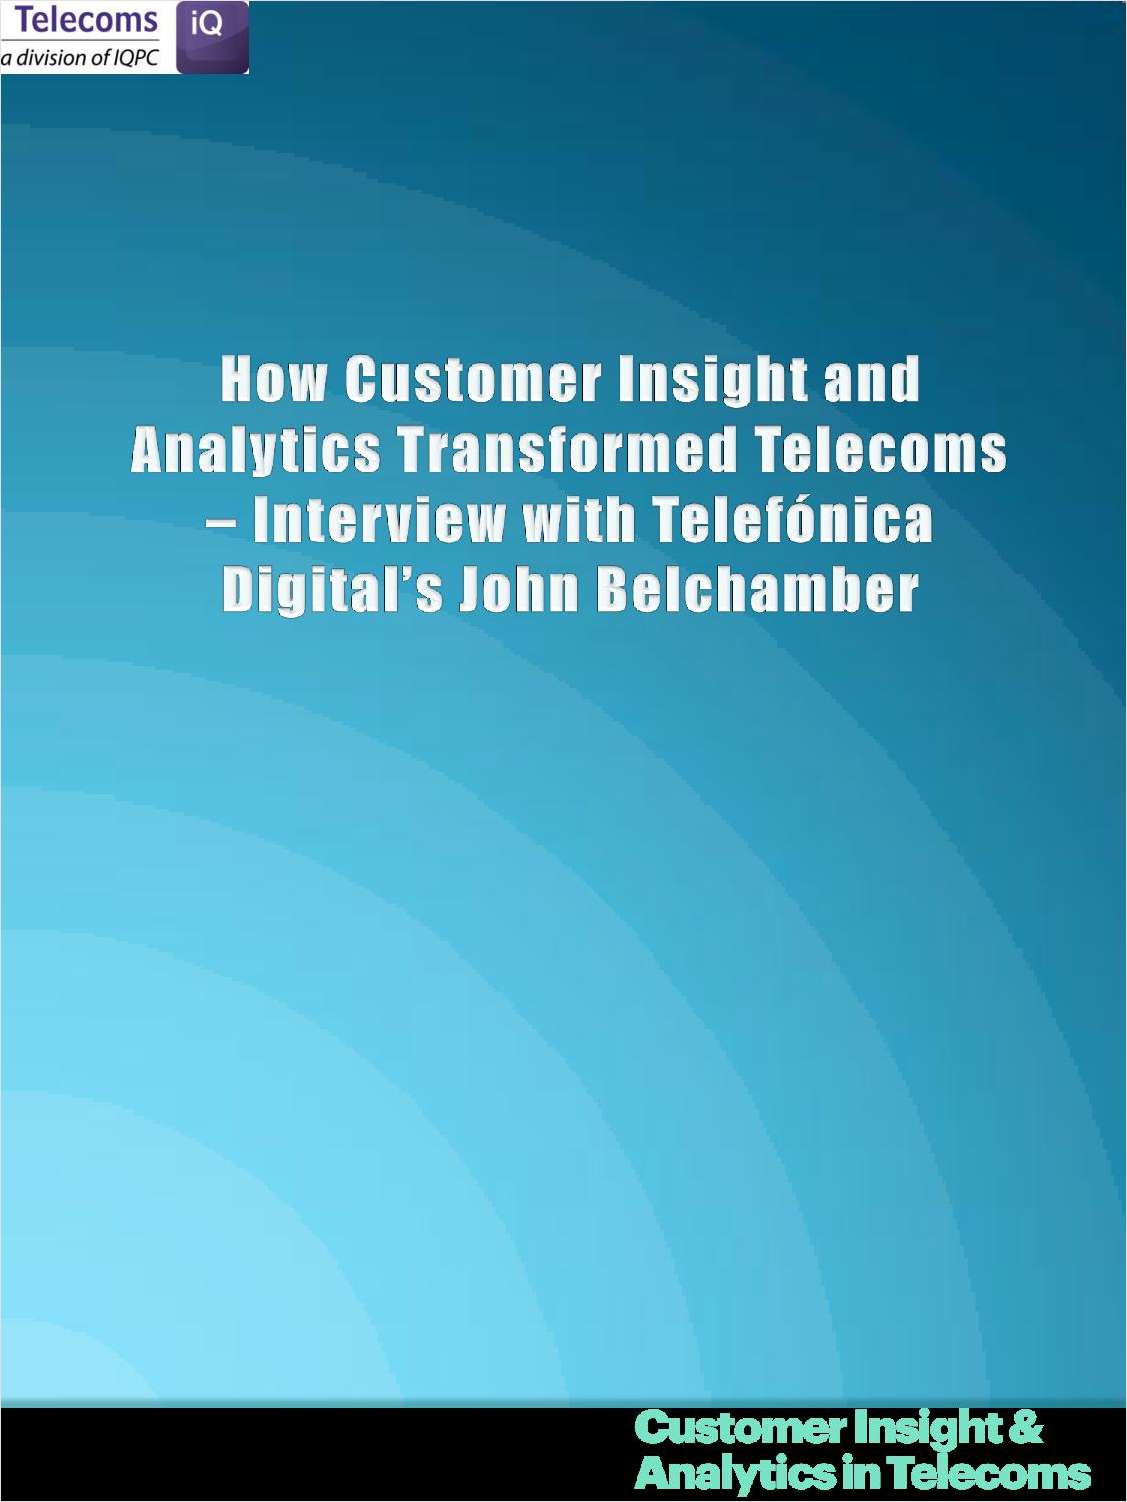 How Customer Insight and Analytics Has Transformed Telecoms